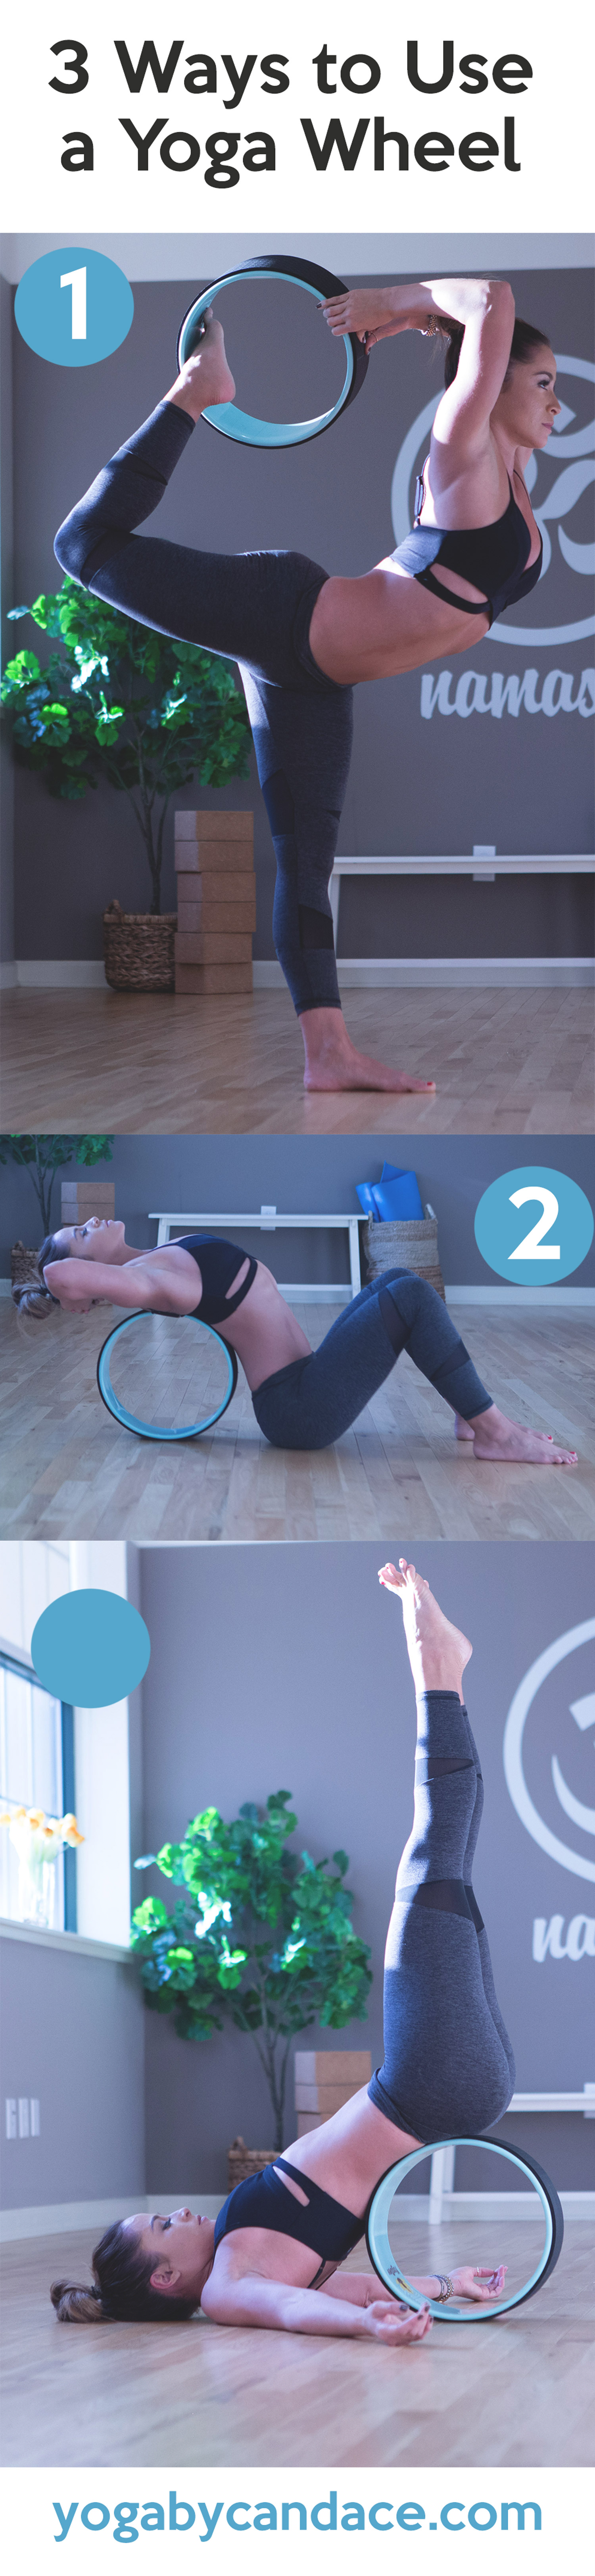 How to Use 3 Common Yoga Props - Yoga Wheel, Yoga Blocks and Yoga